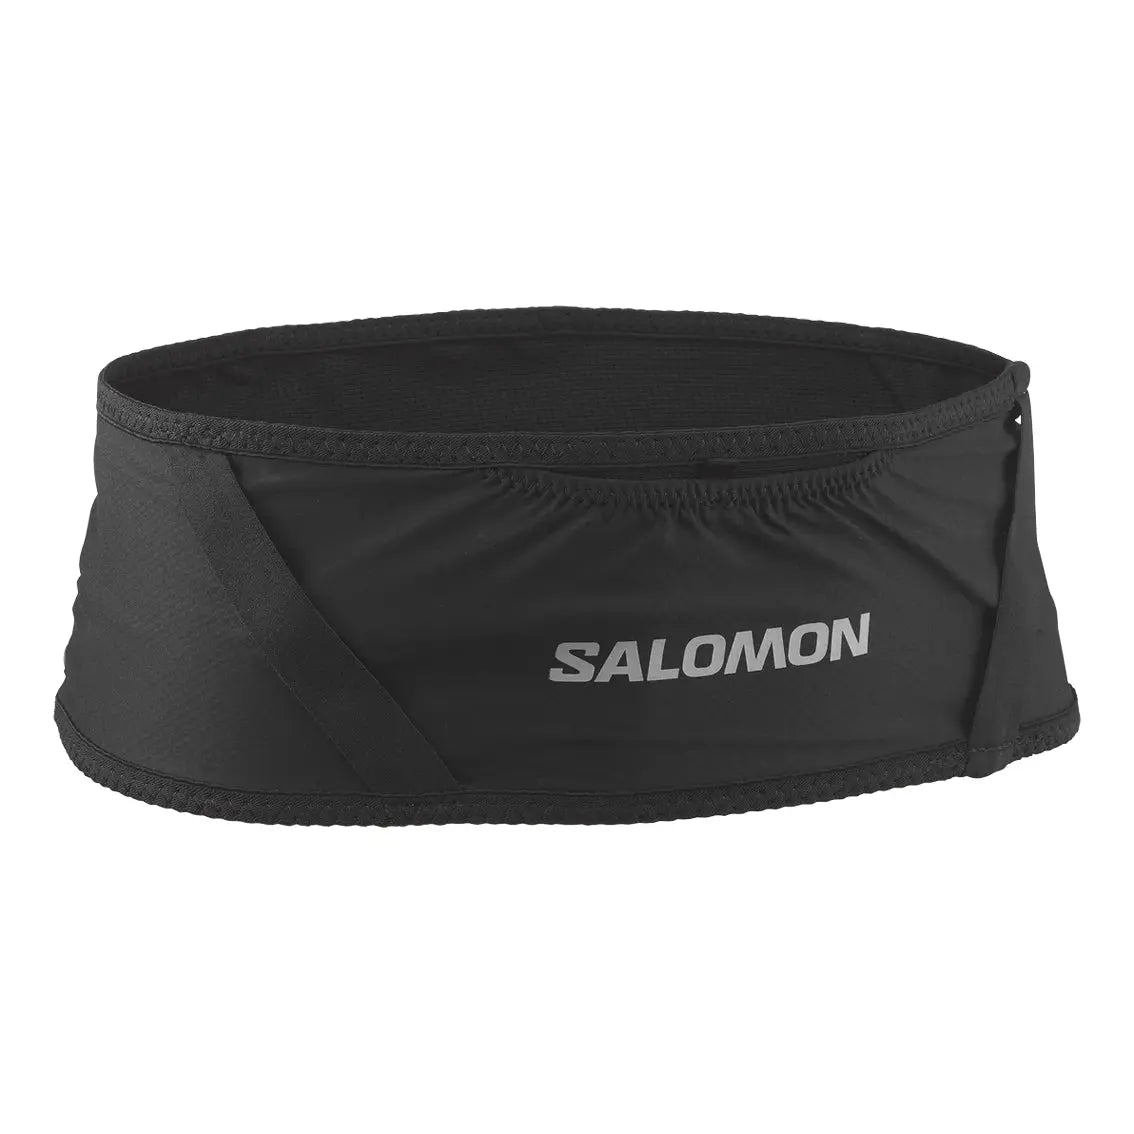 Salomon Pulse Running Belt